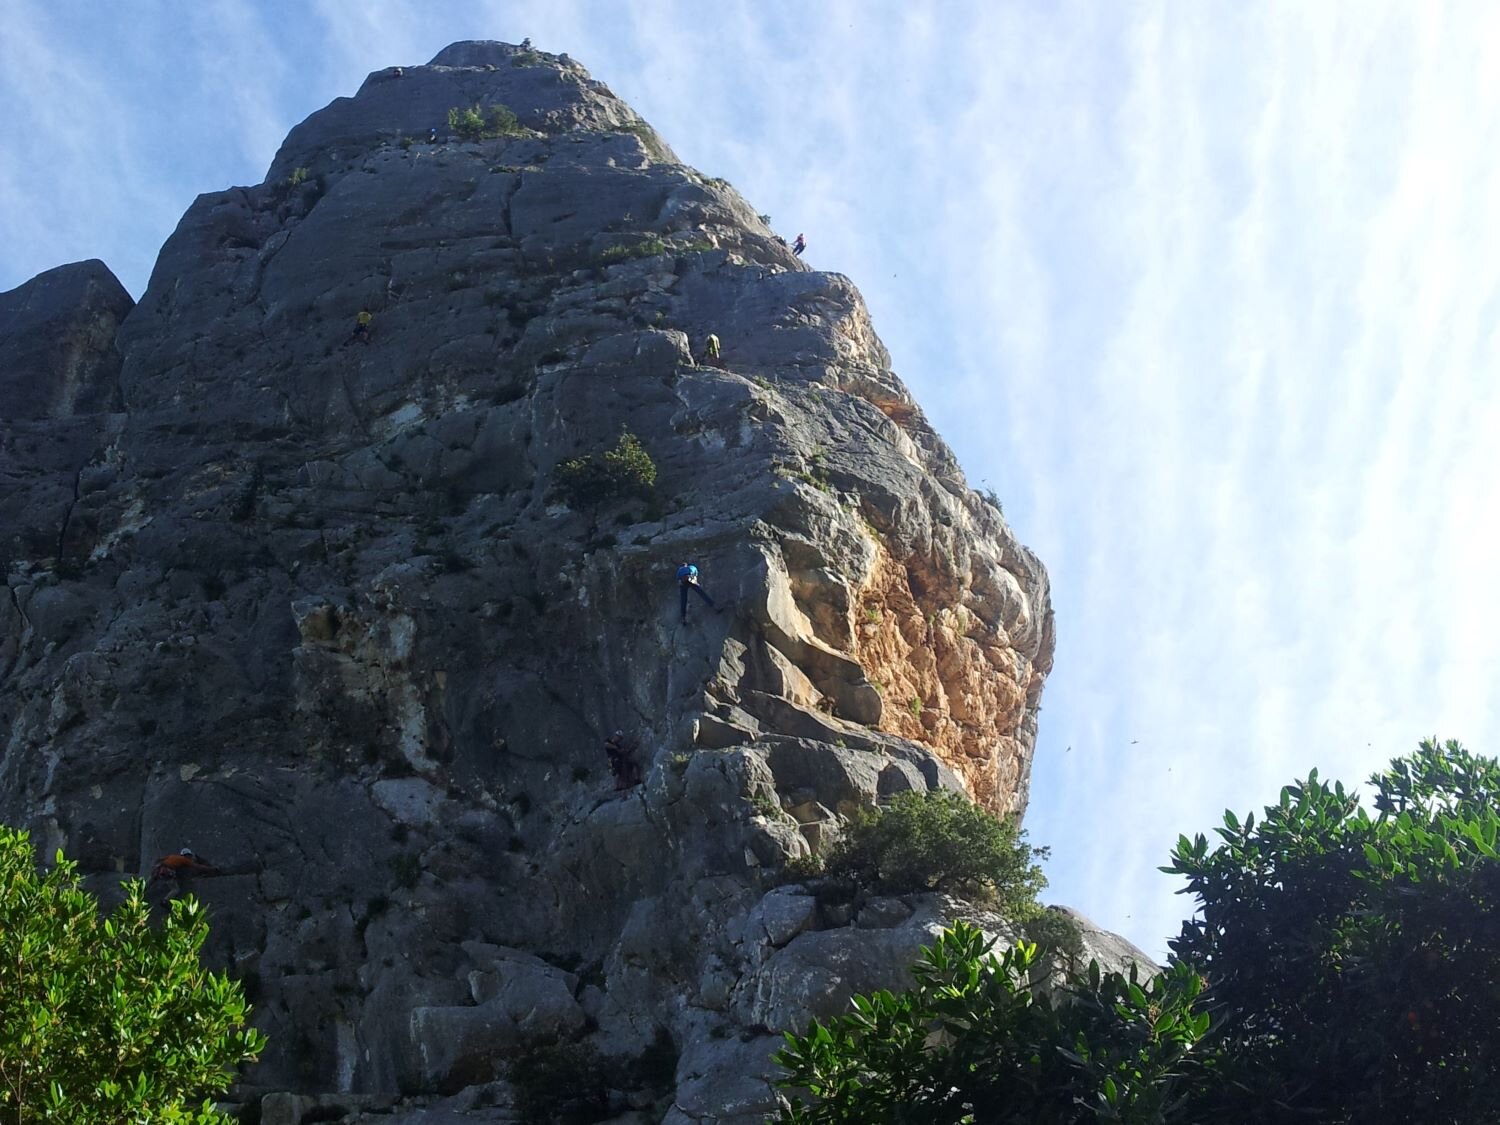 S 13.10 Rees Sardinia rock climbing 08 cropped 1500px.jpg